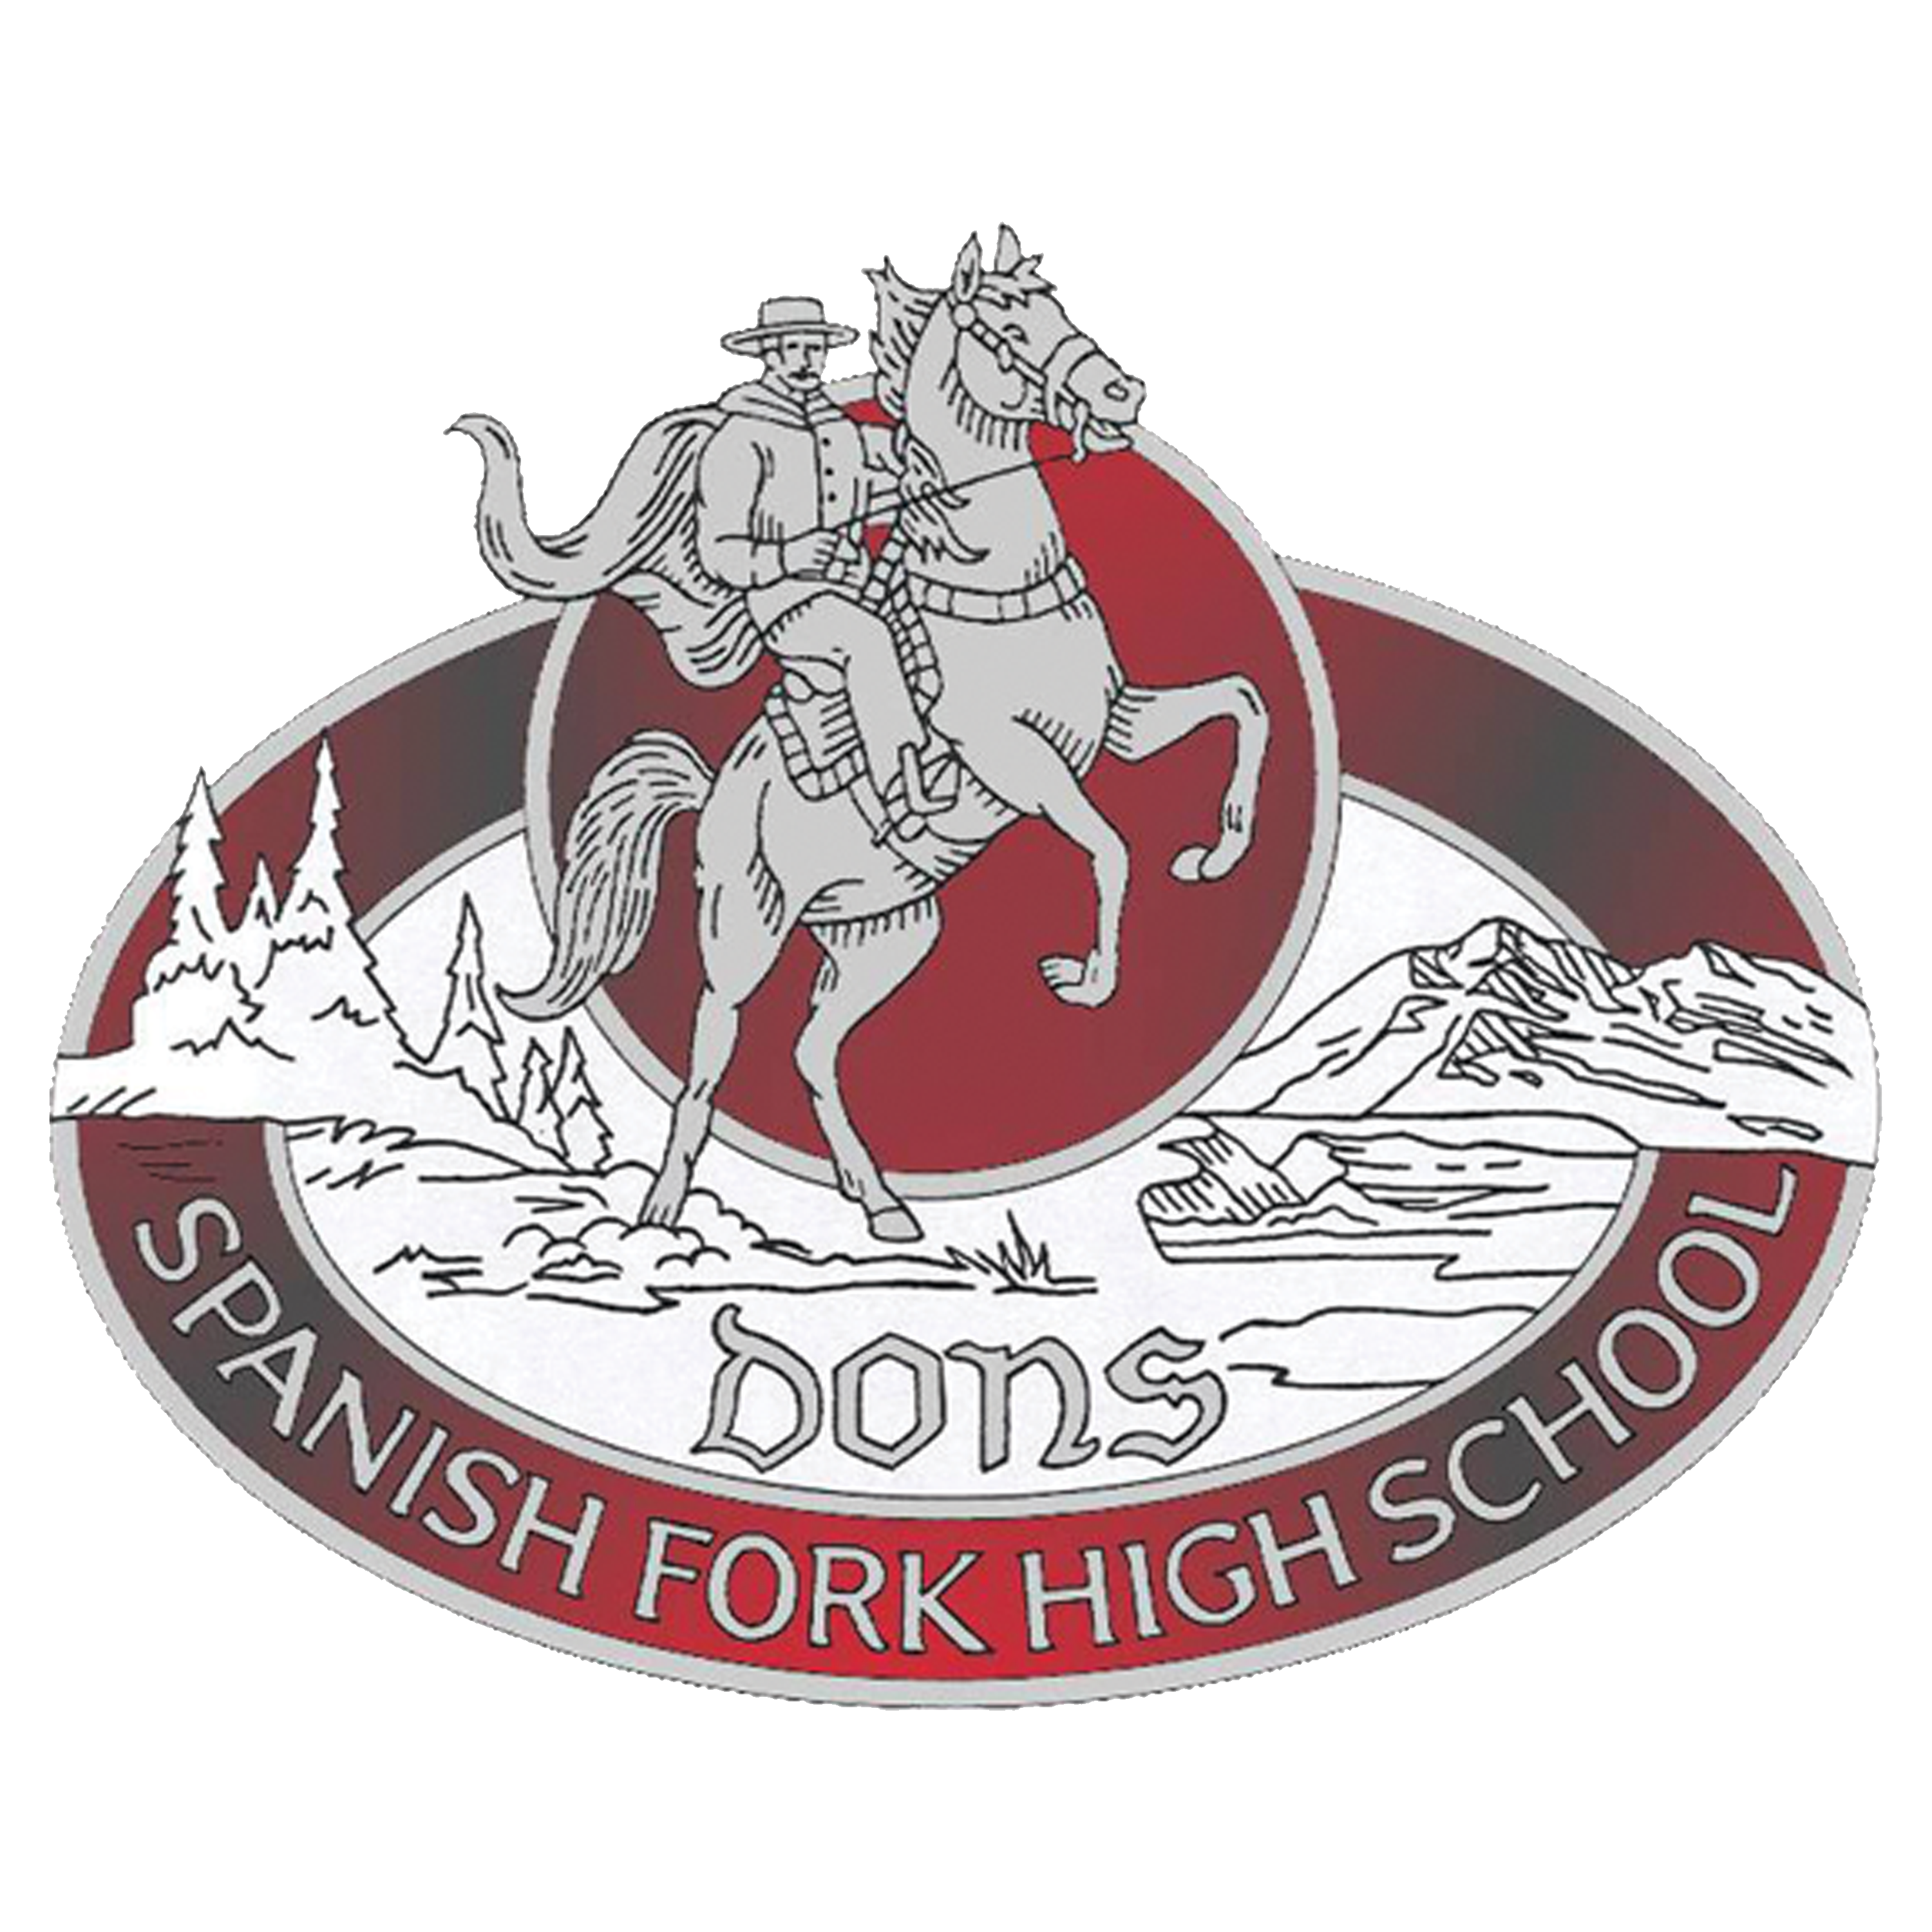 Spanish Fork High School